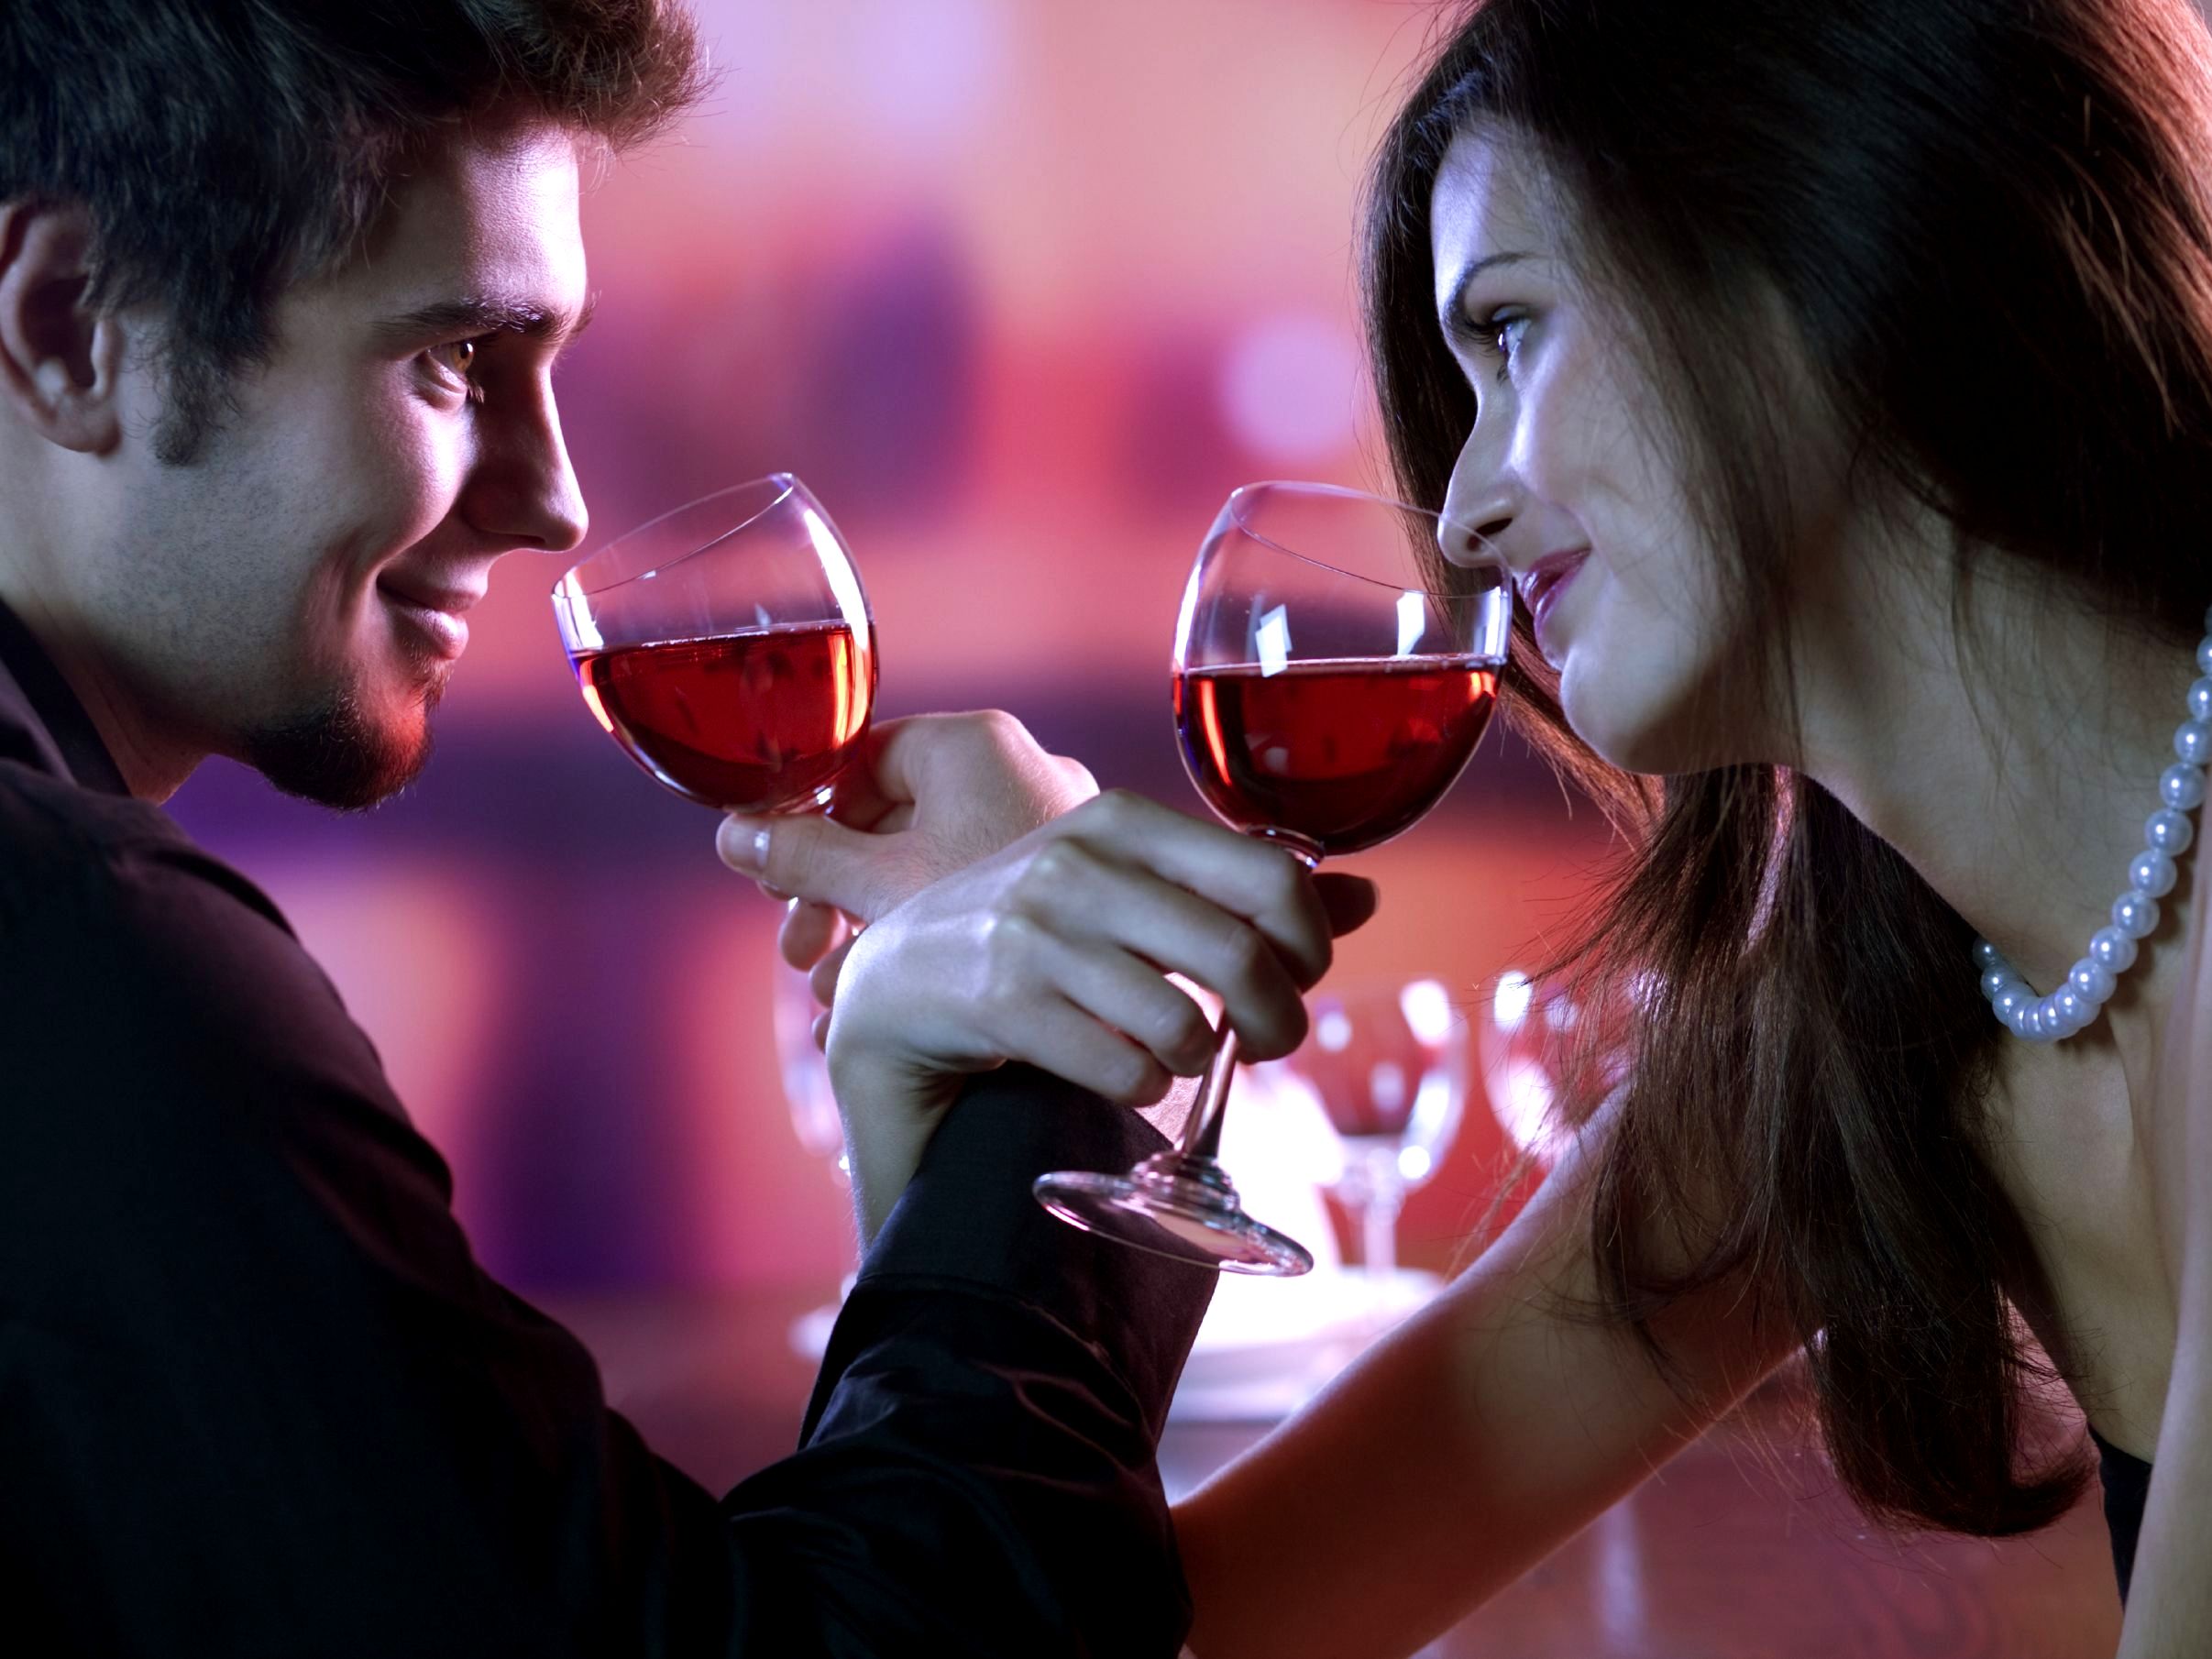 Налейте мне бокал вина песня. Романтическое свидание. Романтический вечер с вином. Романтичный вечер. Влюбленные вино.